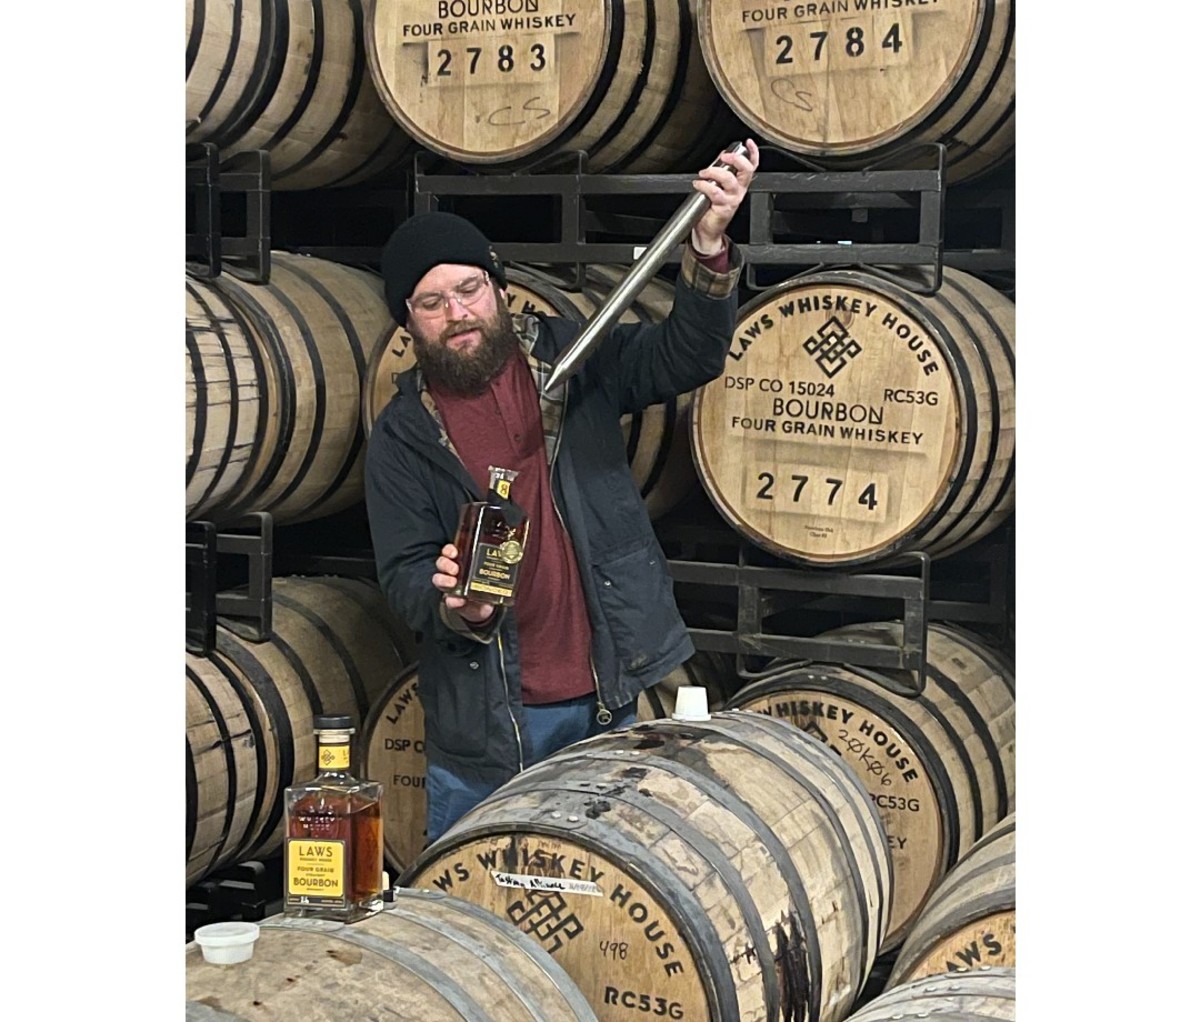 Author Brad Japhe sampling whiskey from Laws distillery.